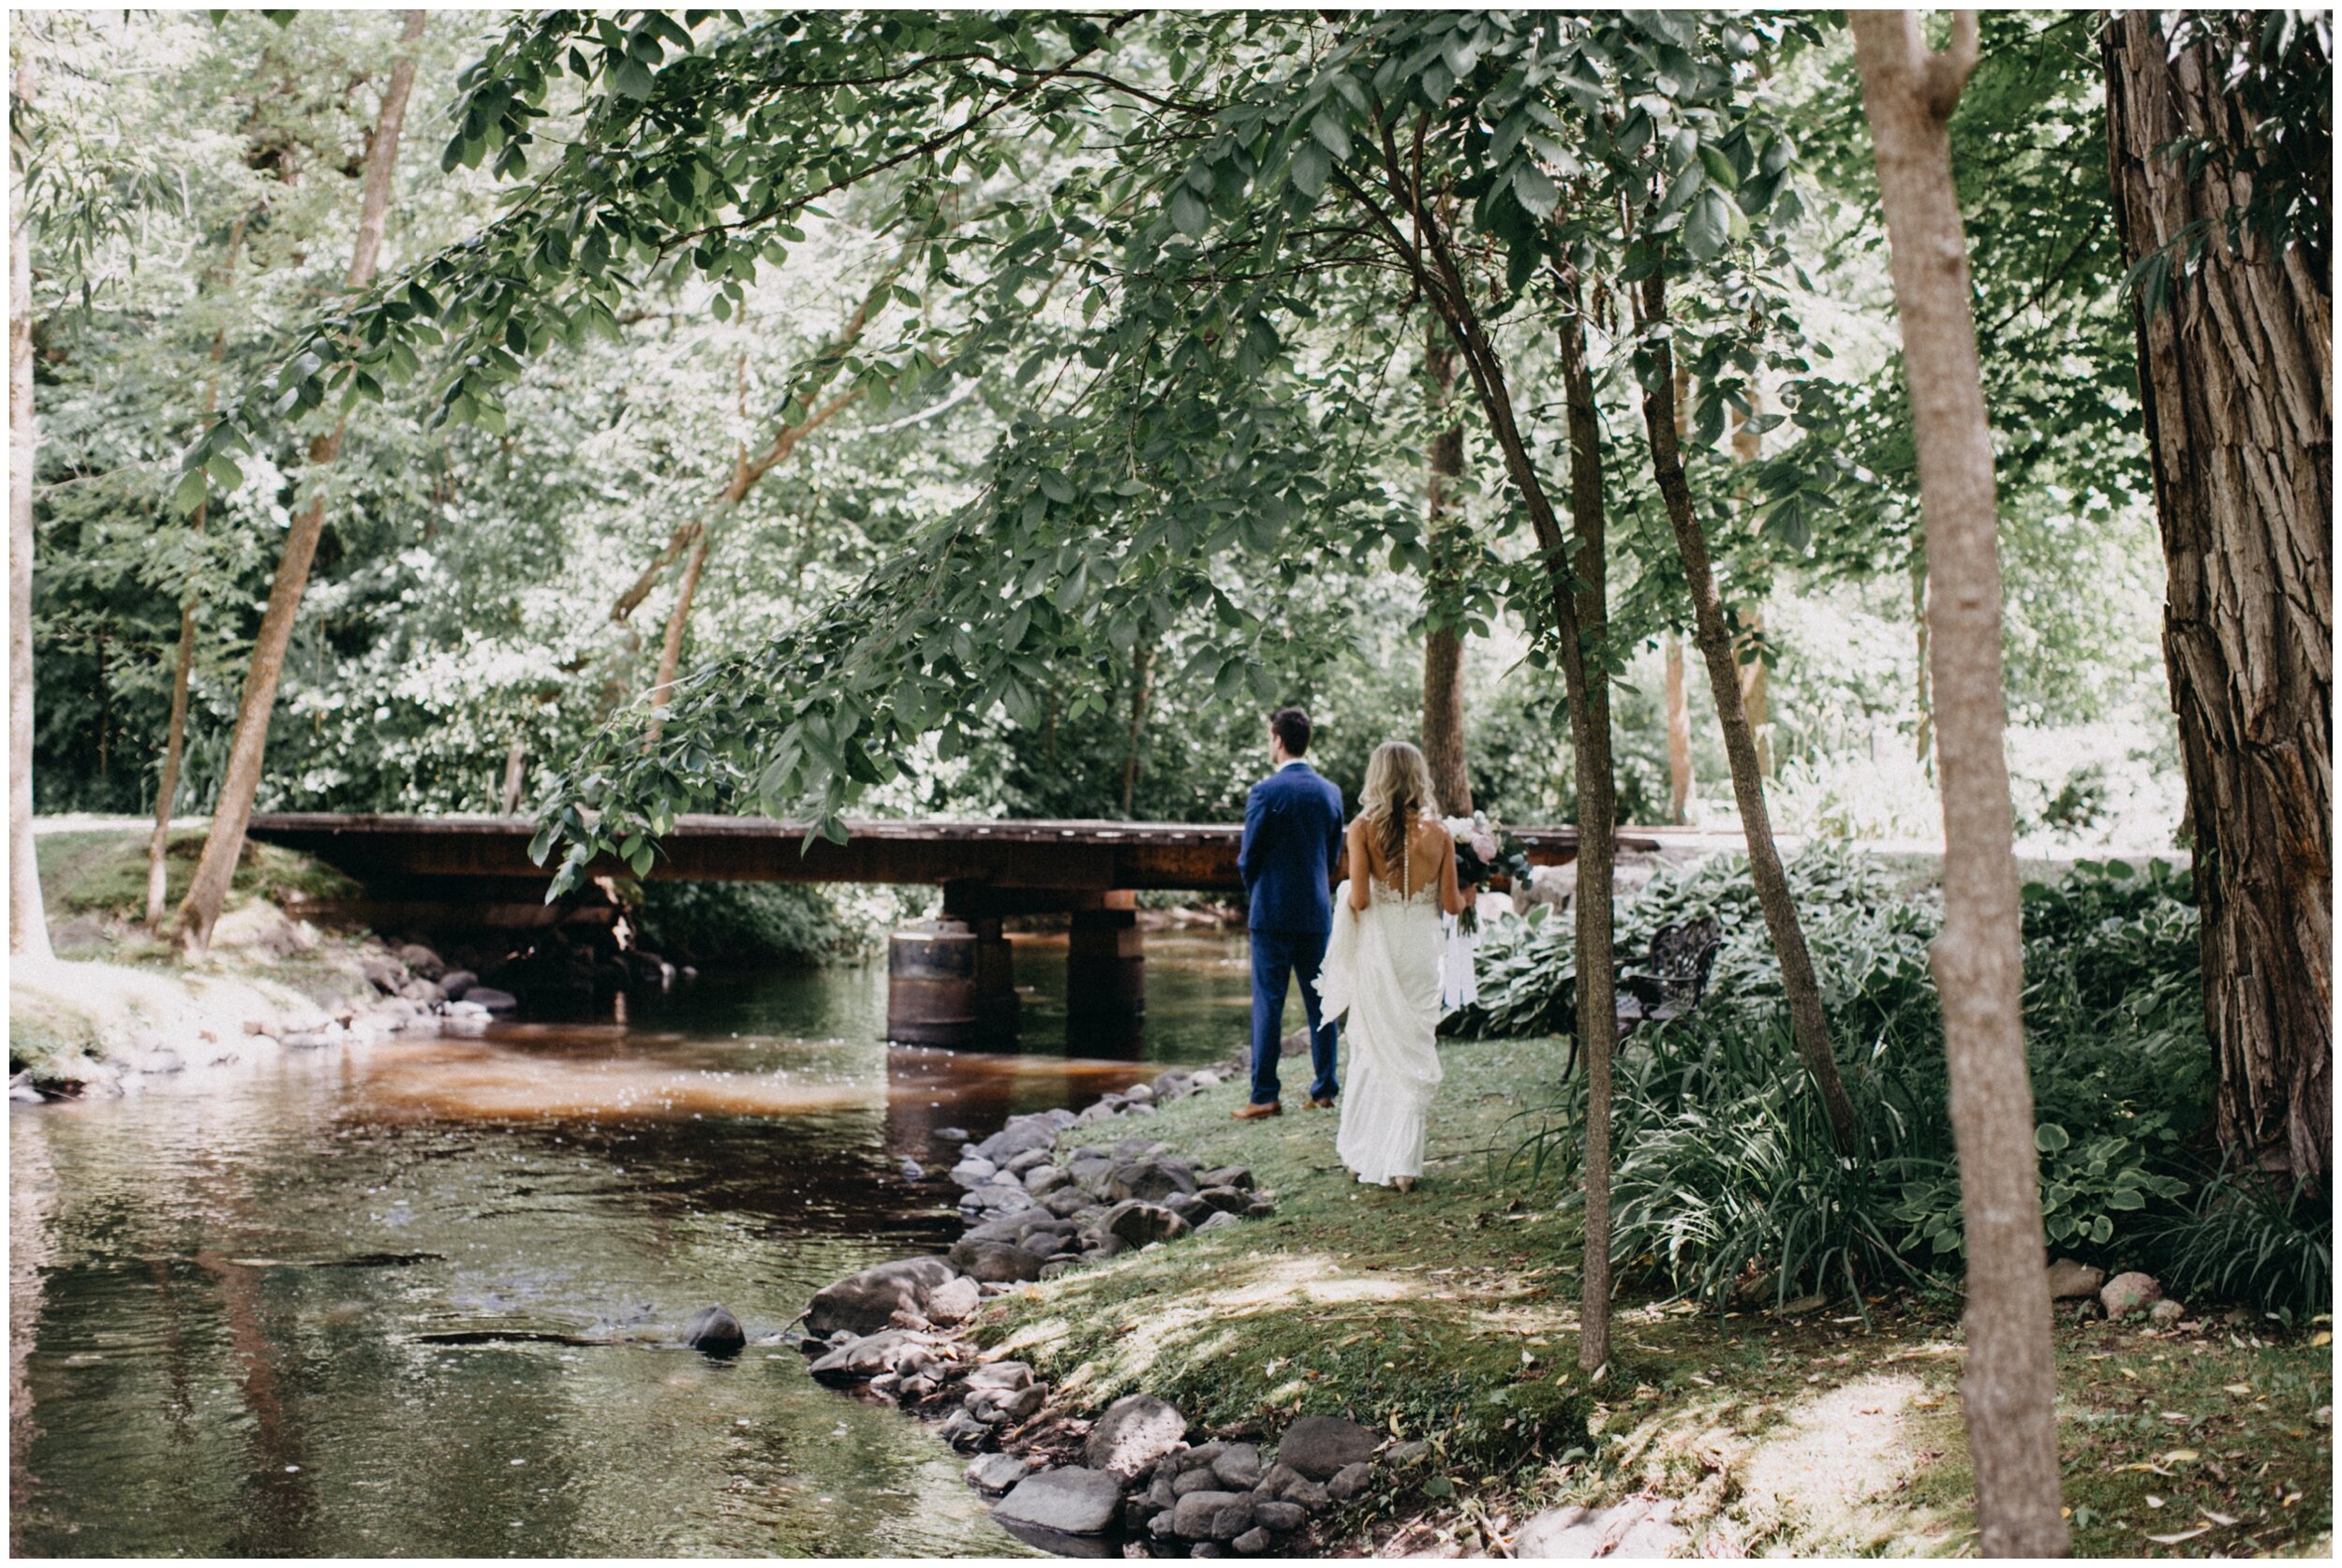 Bride and groom first look alongside creek at Minnesota farm wedding venue